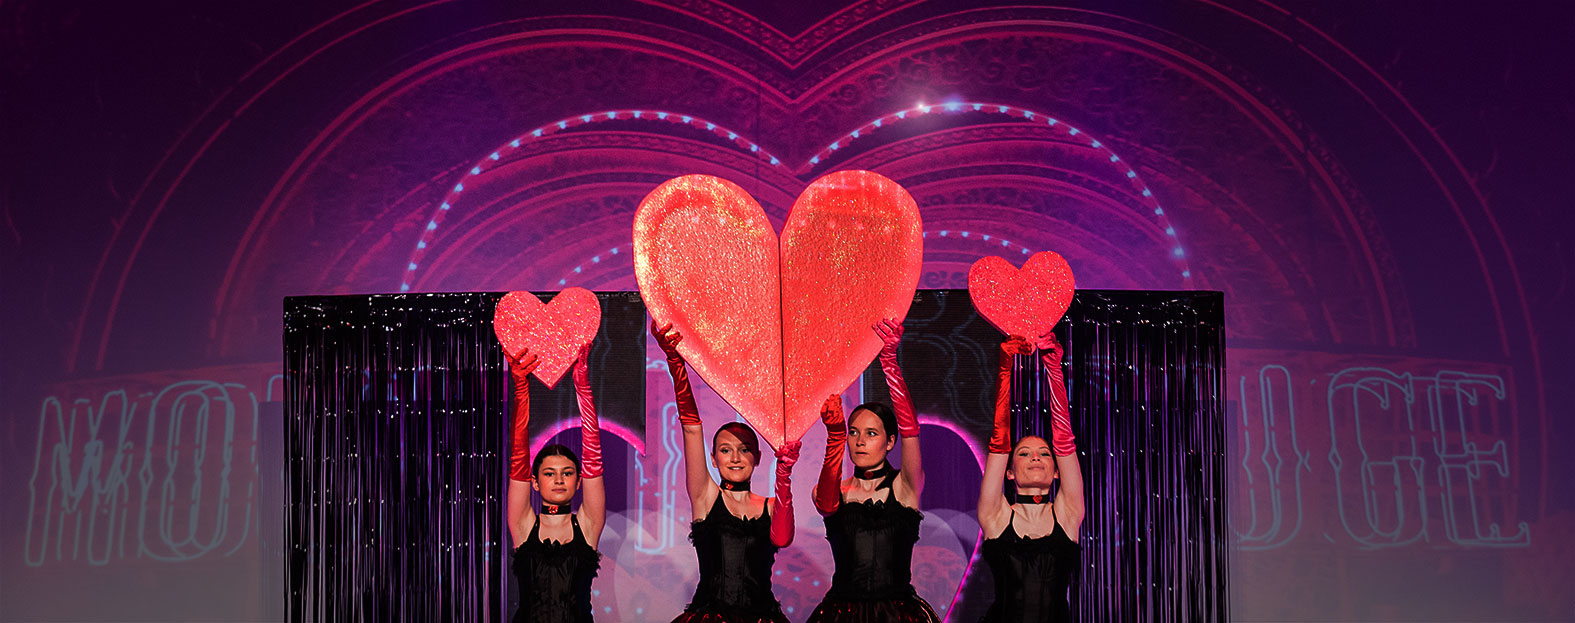 Lissy-G-Dance-MoulinRouge-Burlesque-Cher-Cabaret-Kunstueck-Schwabach-Tanz-heart-Show-web.jpg